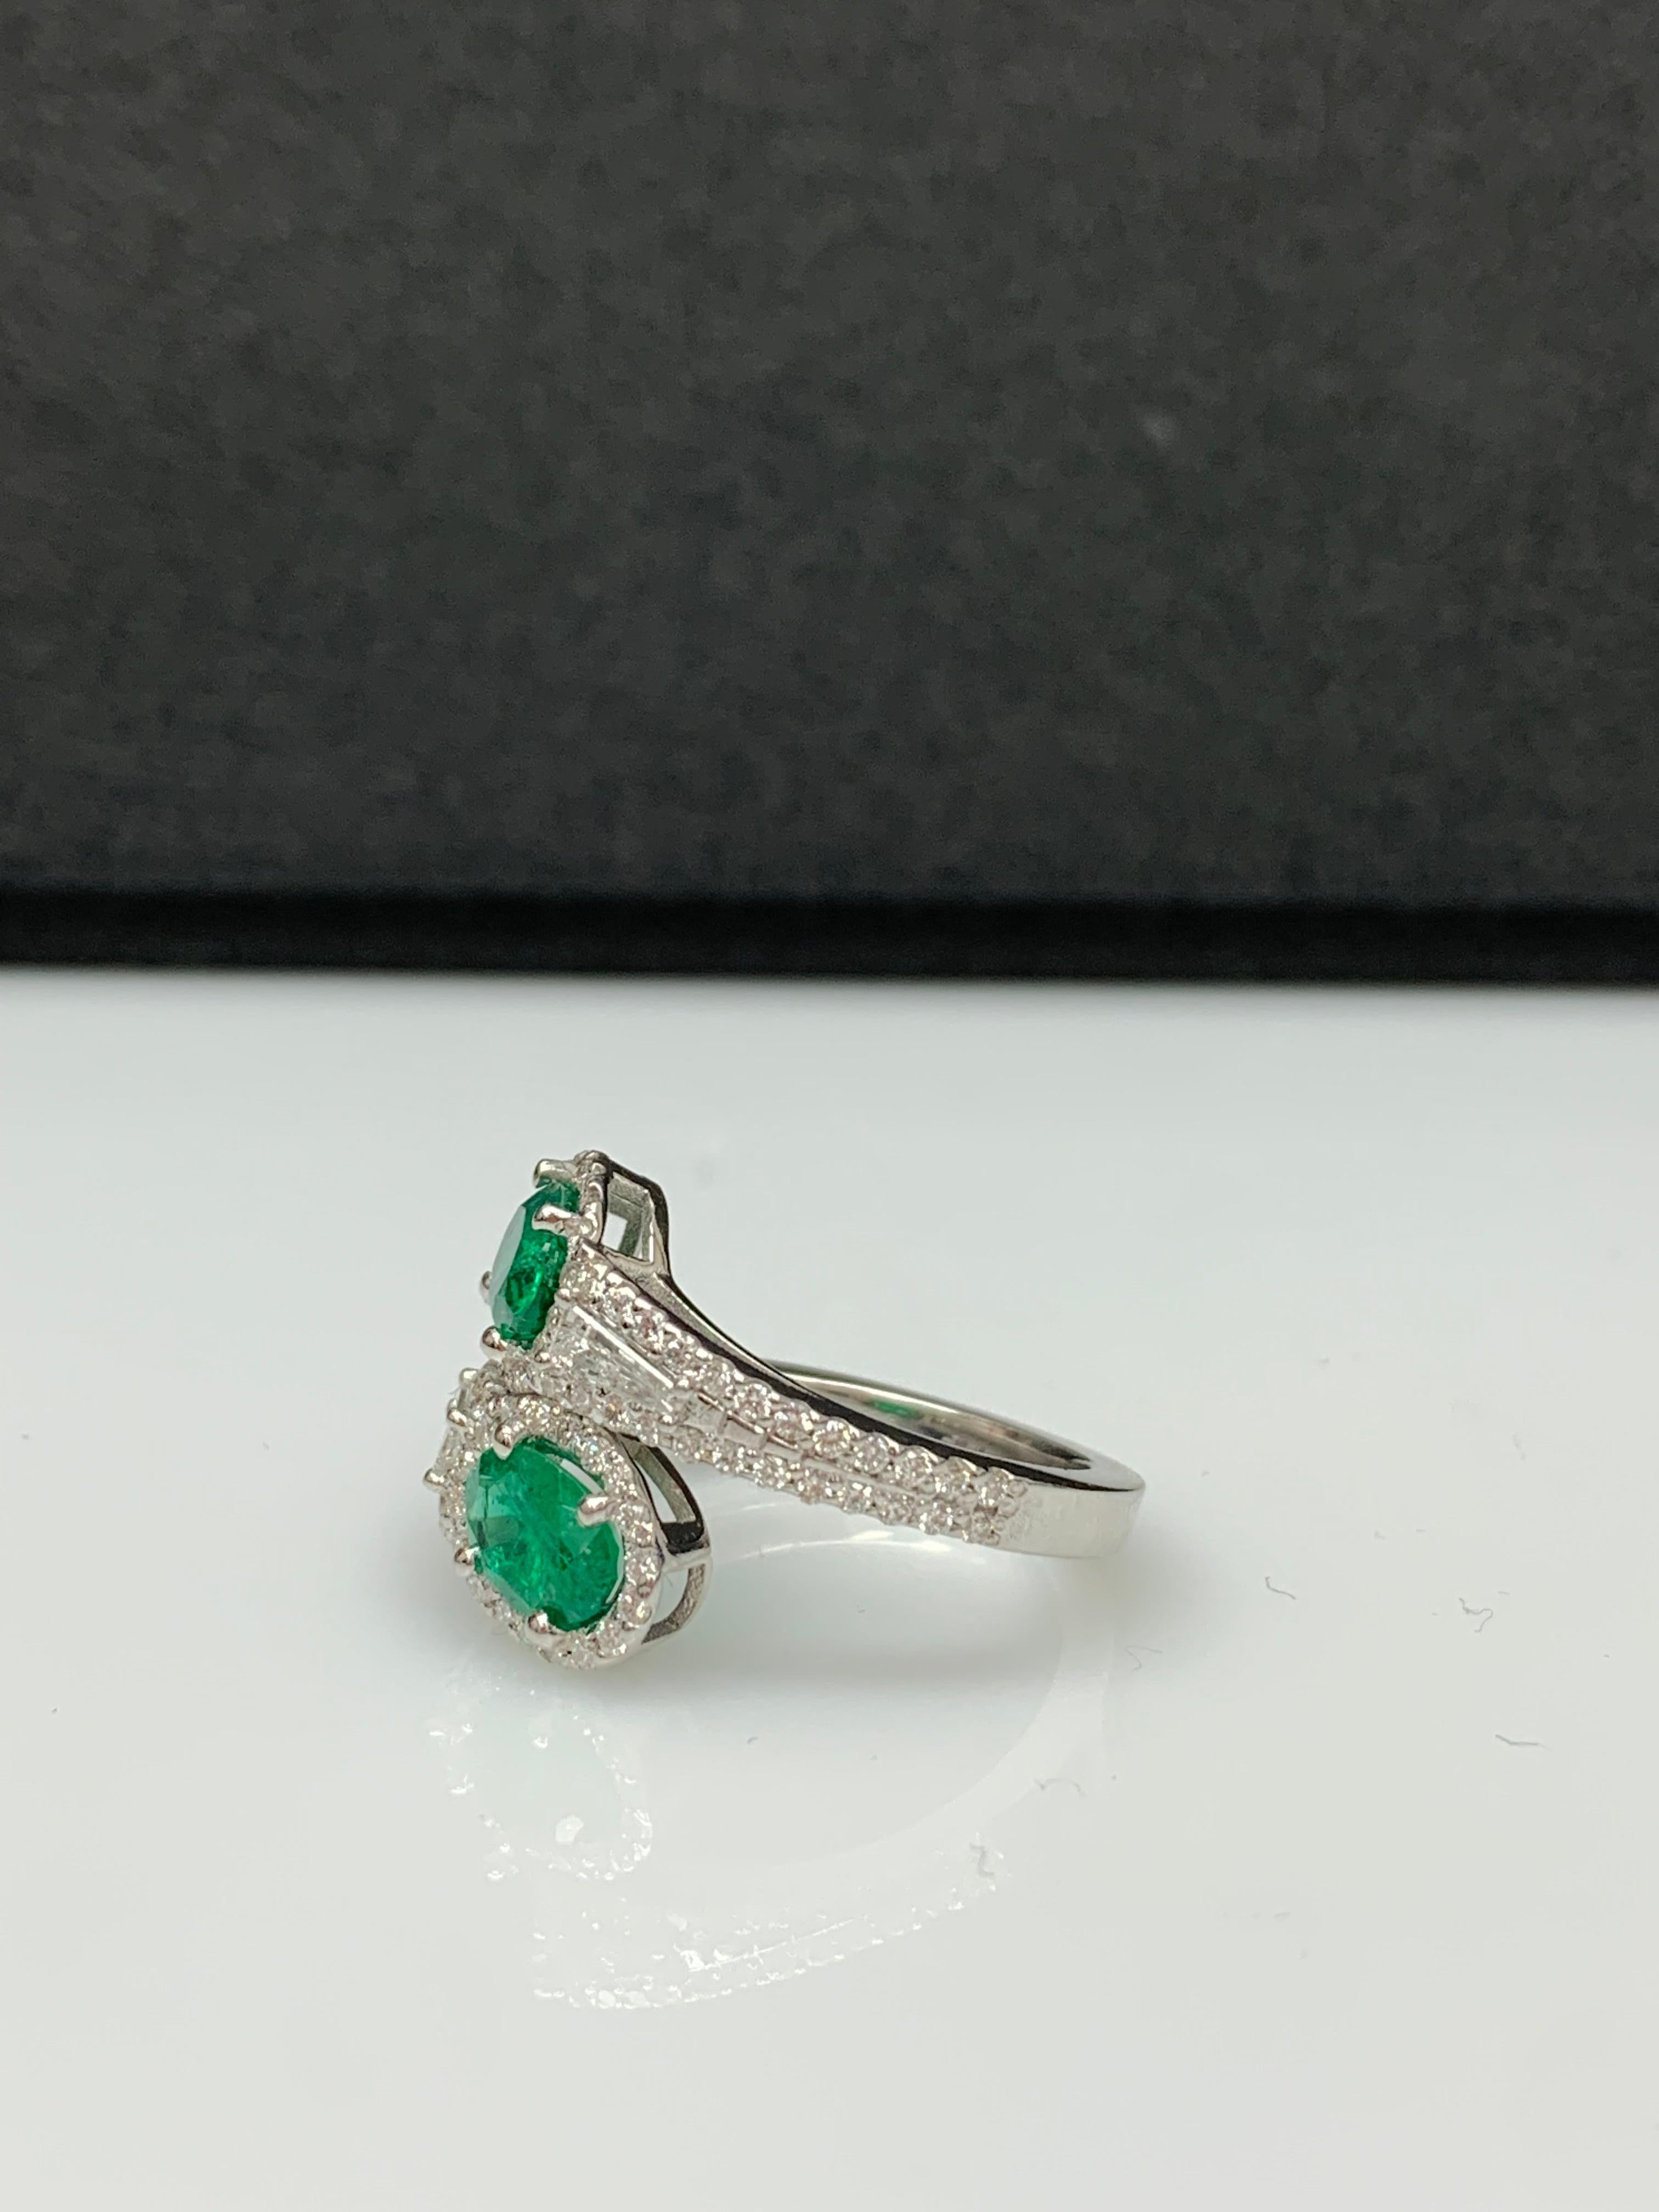 1.52 Carat Oval Cut Emerald Diamond Toi et Moi Engagement Ring 14K White Gold For Sale 1